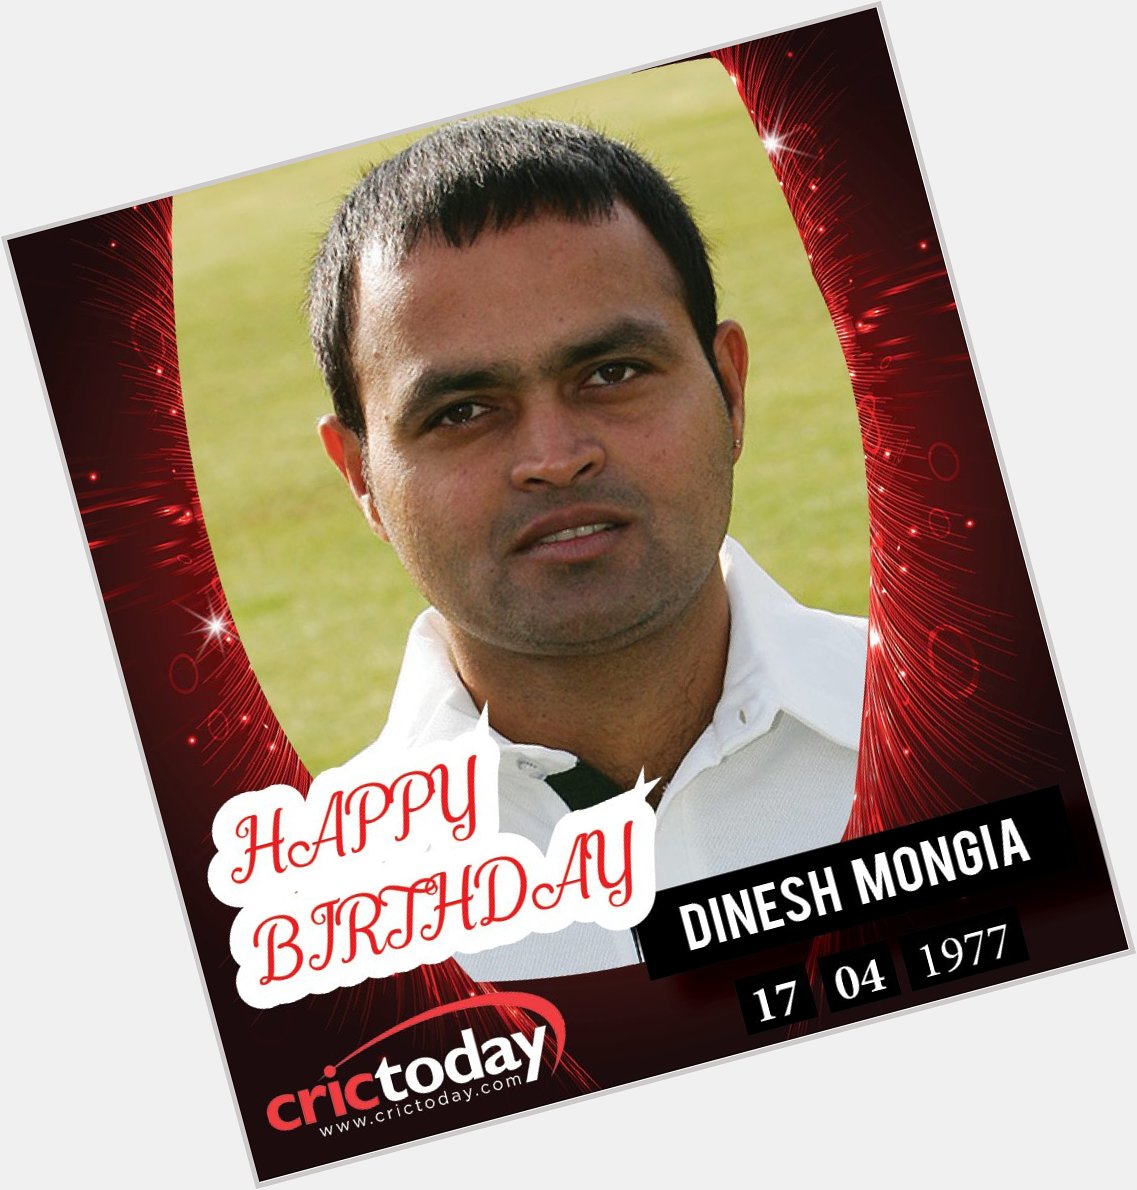  Happy Birthday Dinesh Mongia 